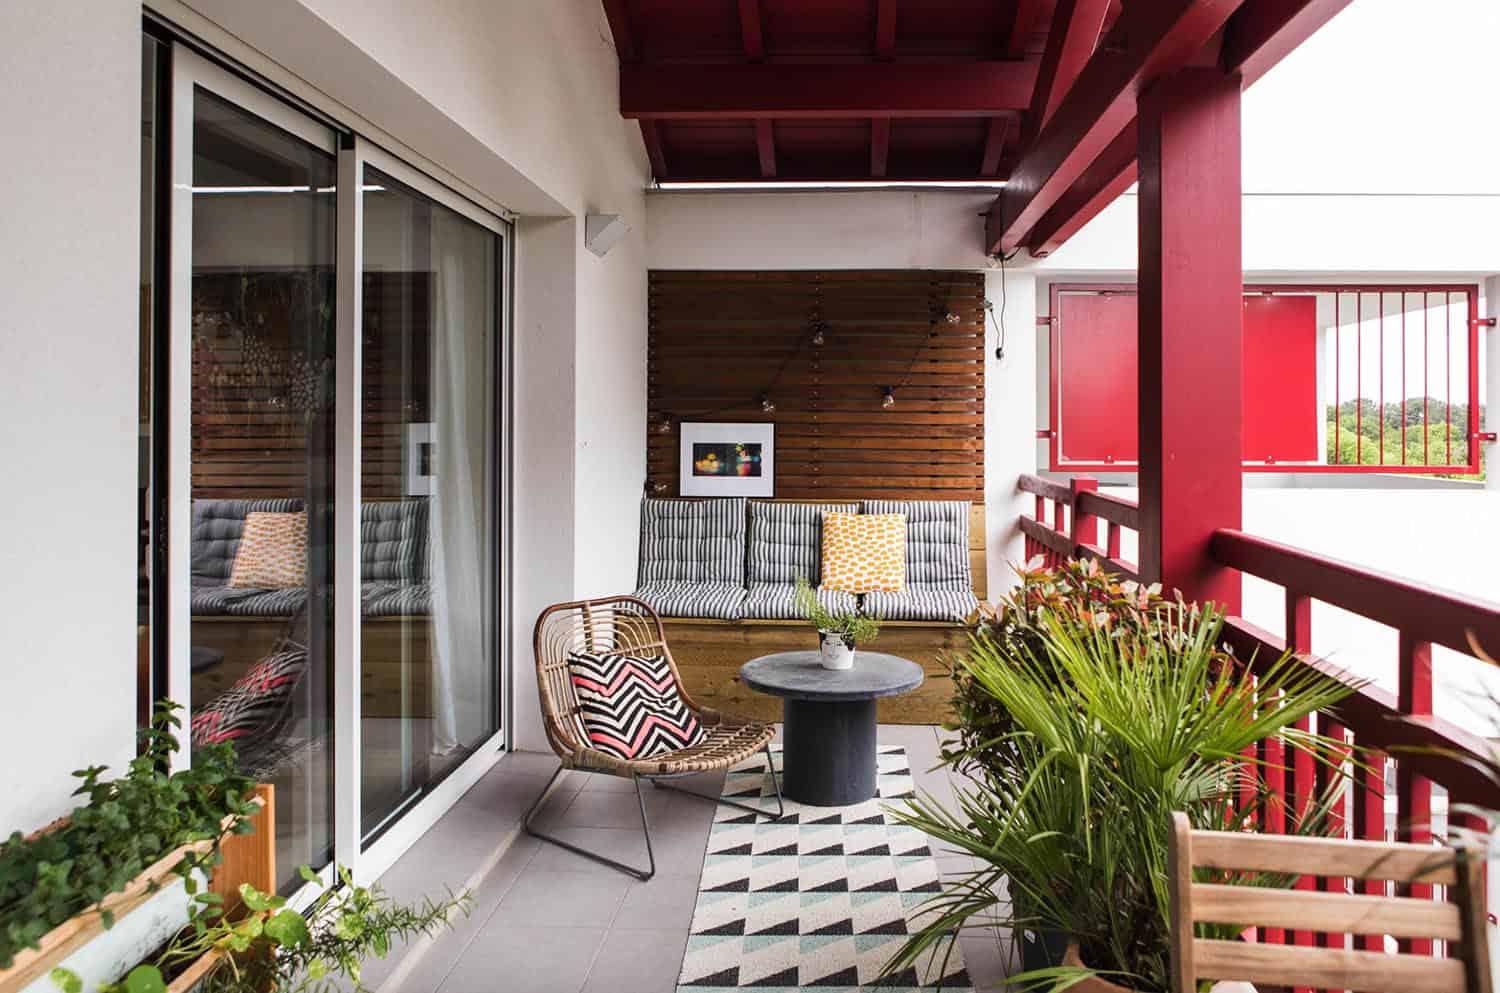 apartment-balcony-design-ideas